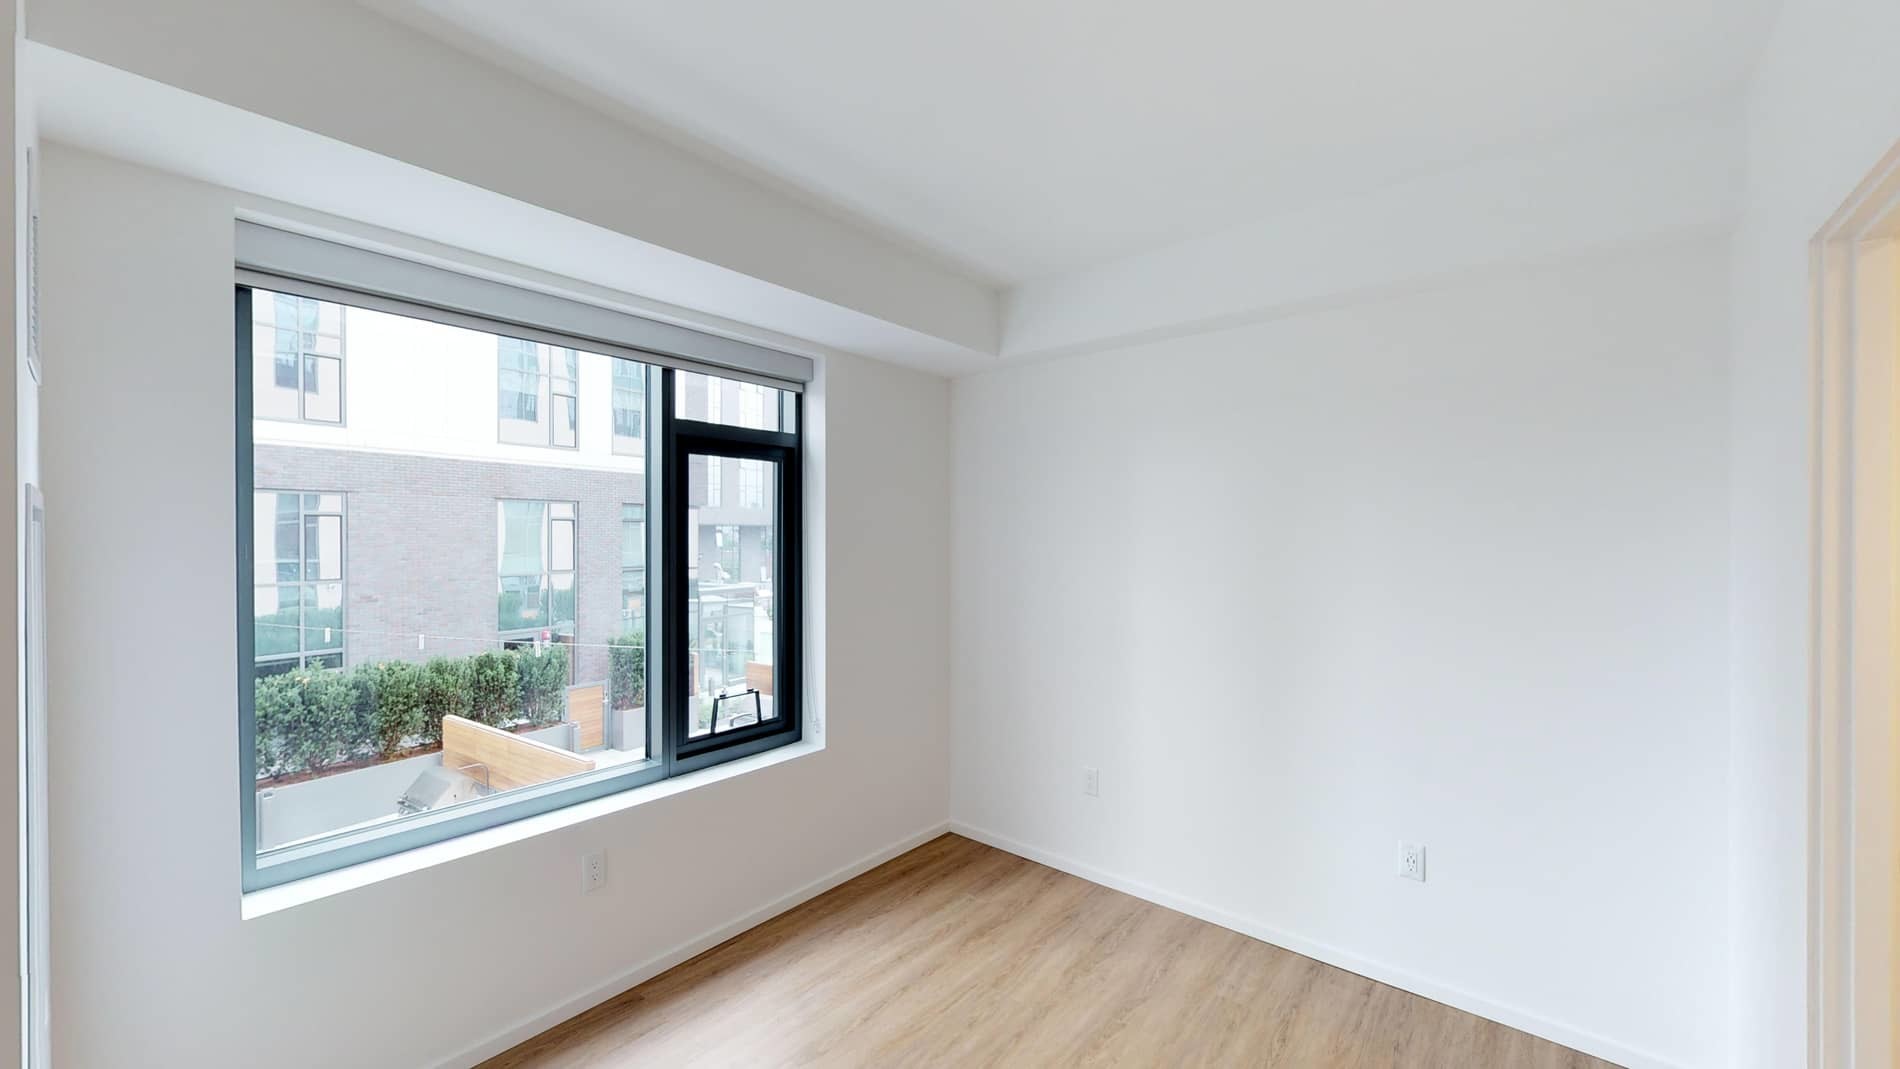 Photos of apartment on Harrison Ave.,Boston MA 02118